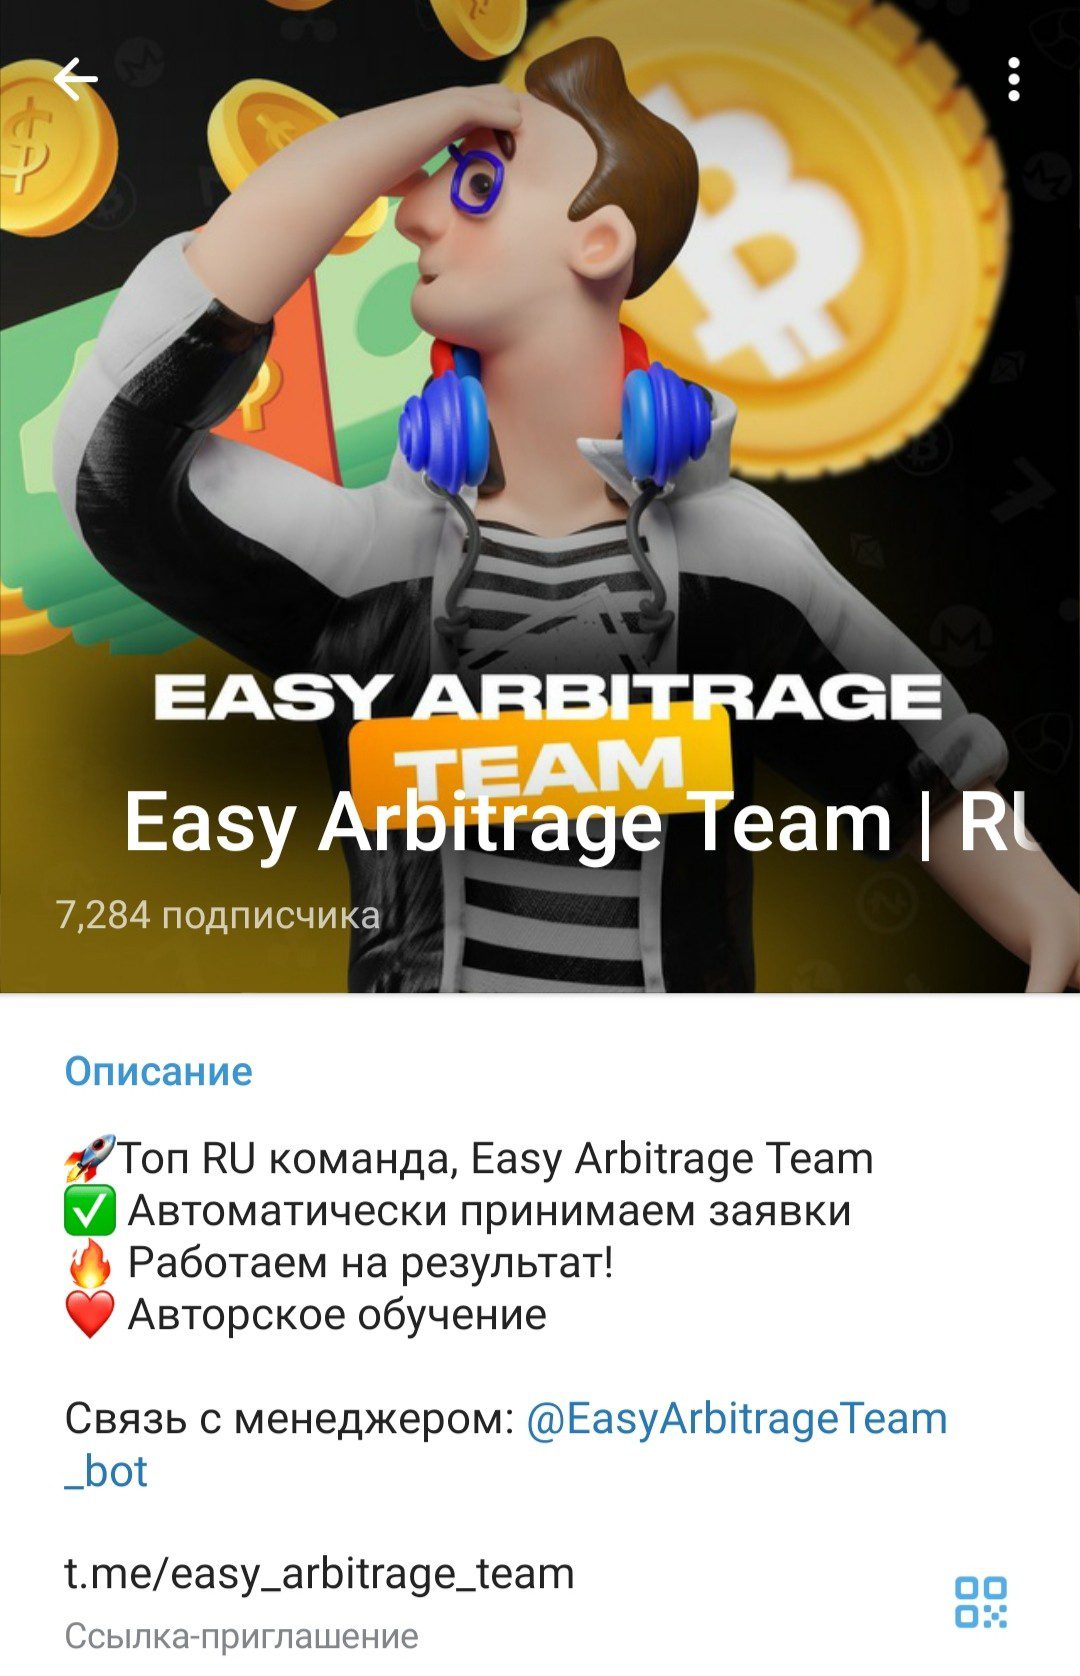 Easy Arbitrage Team отзывы